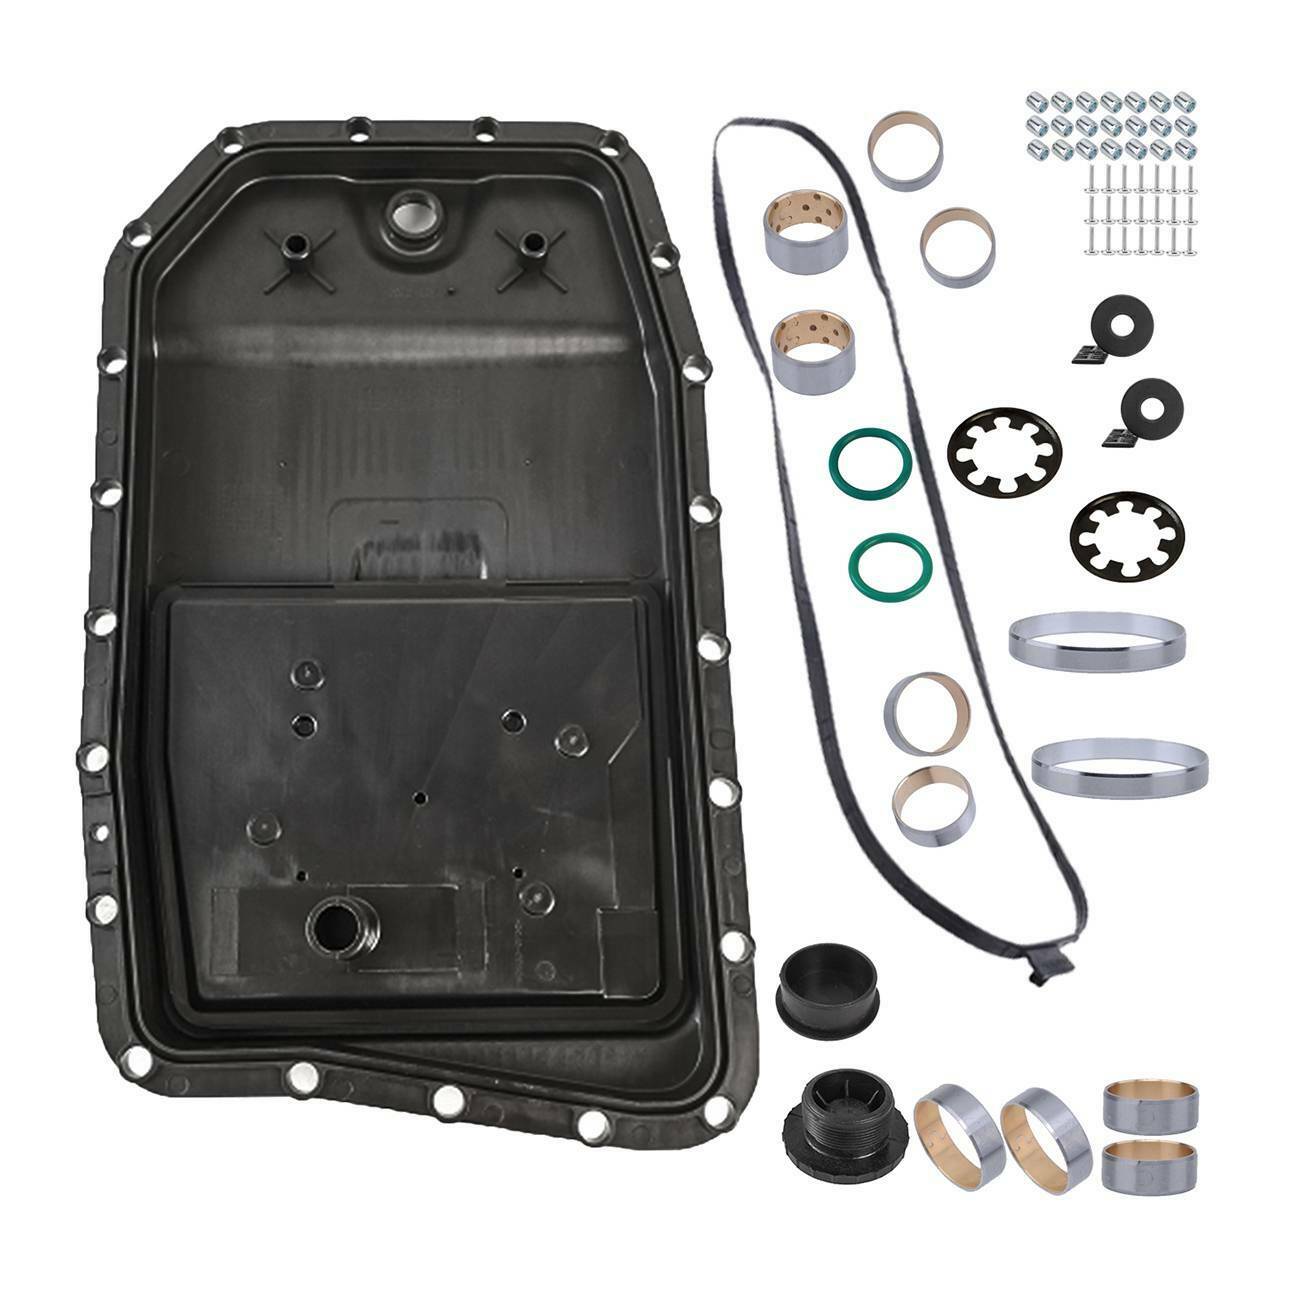 Automatic Transmission 6-speed Oil Pan Filter Kit for BMW E60 E70 E83 E90 German Made